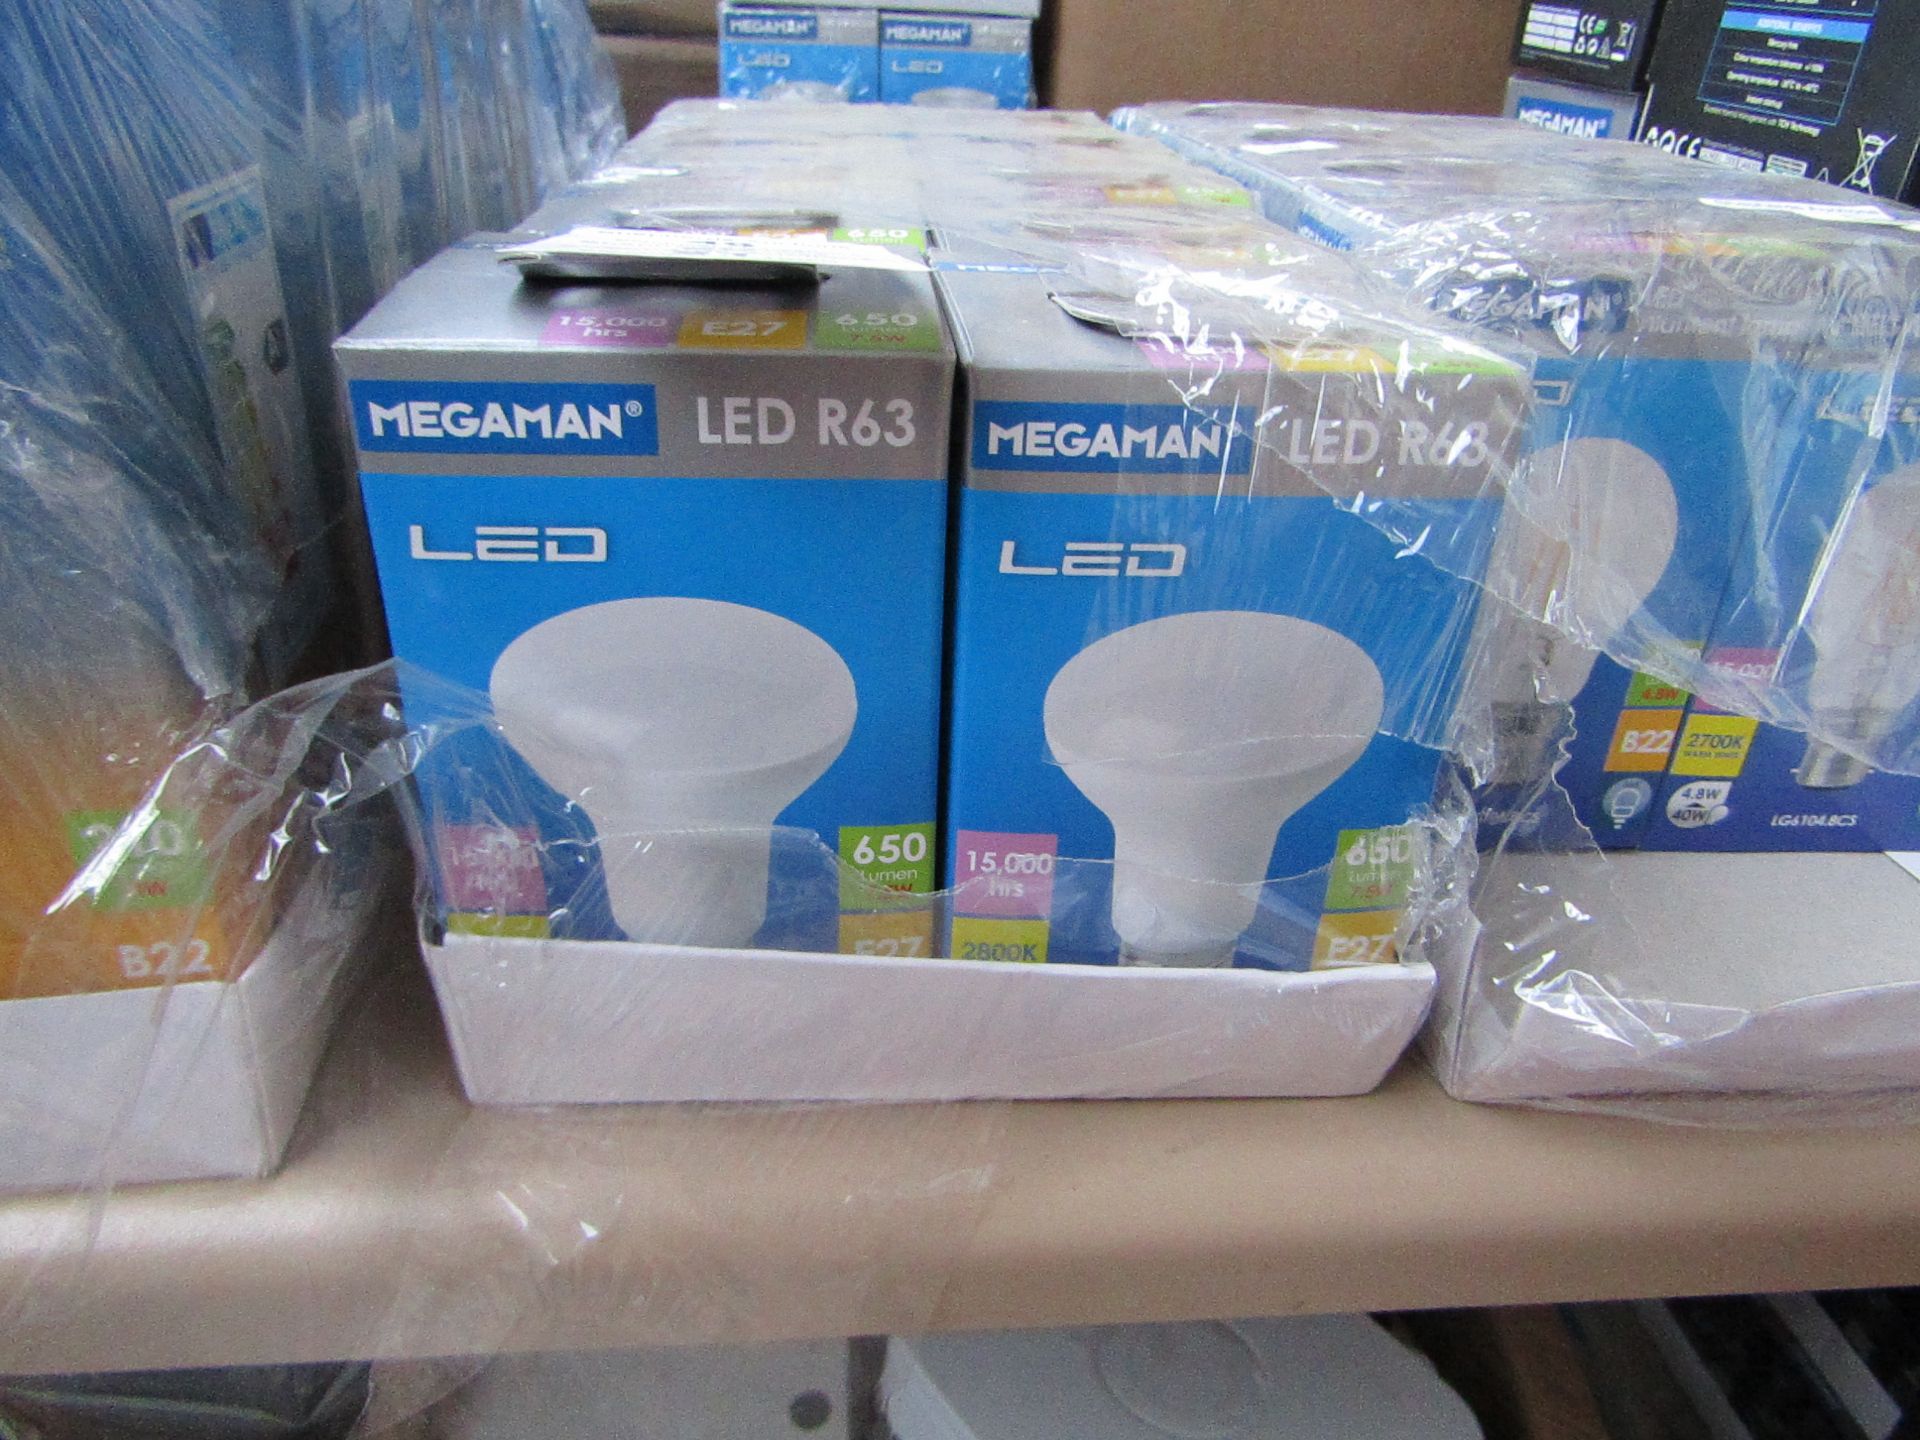 1x Megaman LED R63 bulb, new and boxed. 15,000Hrs / E27 / 650 Lumens